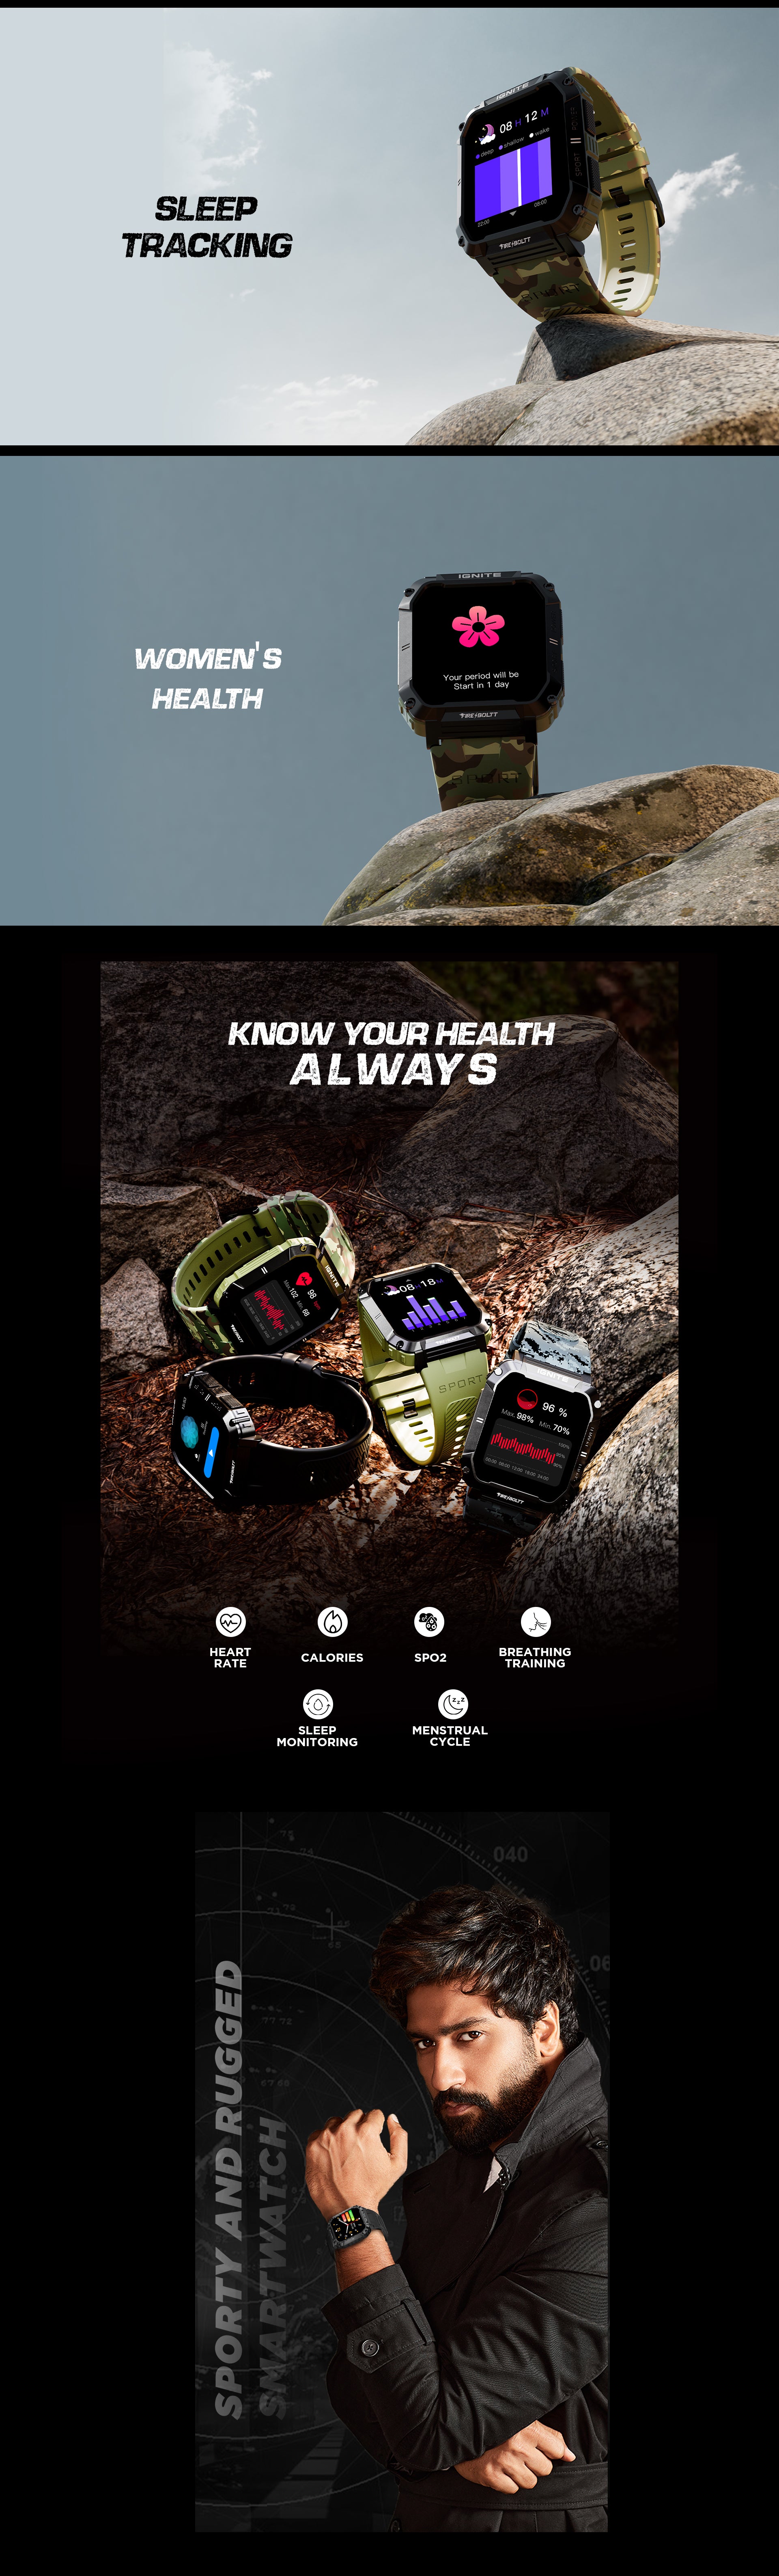 Fire-Boltt Cobra 1.78" AMOLED Army Grade Build Smartwatch